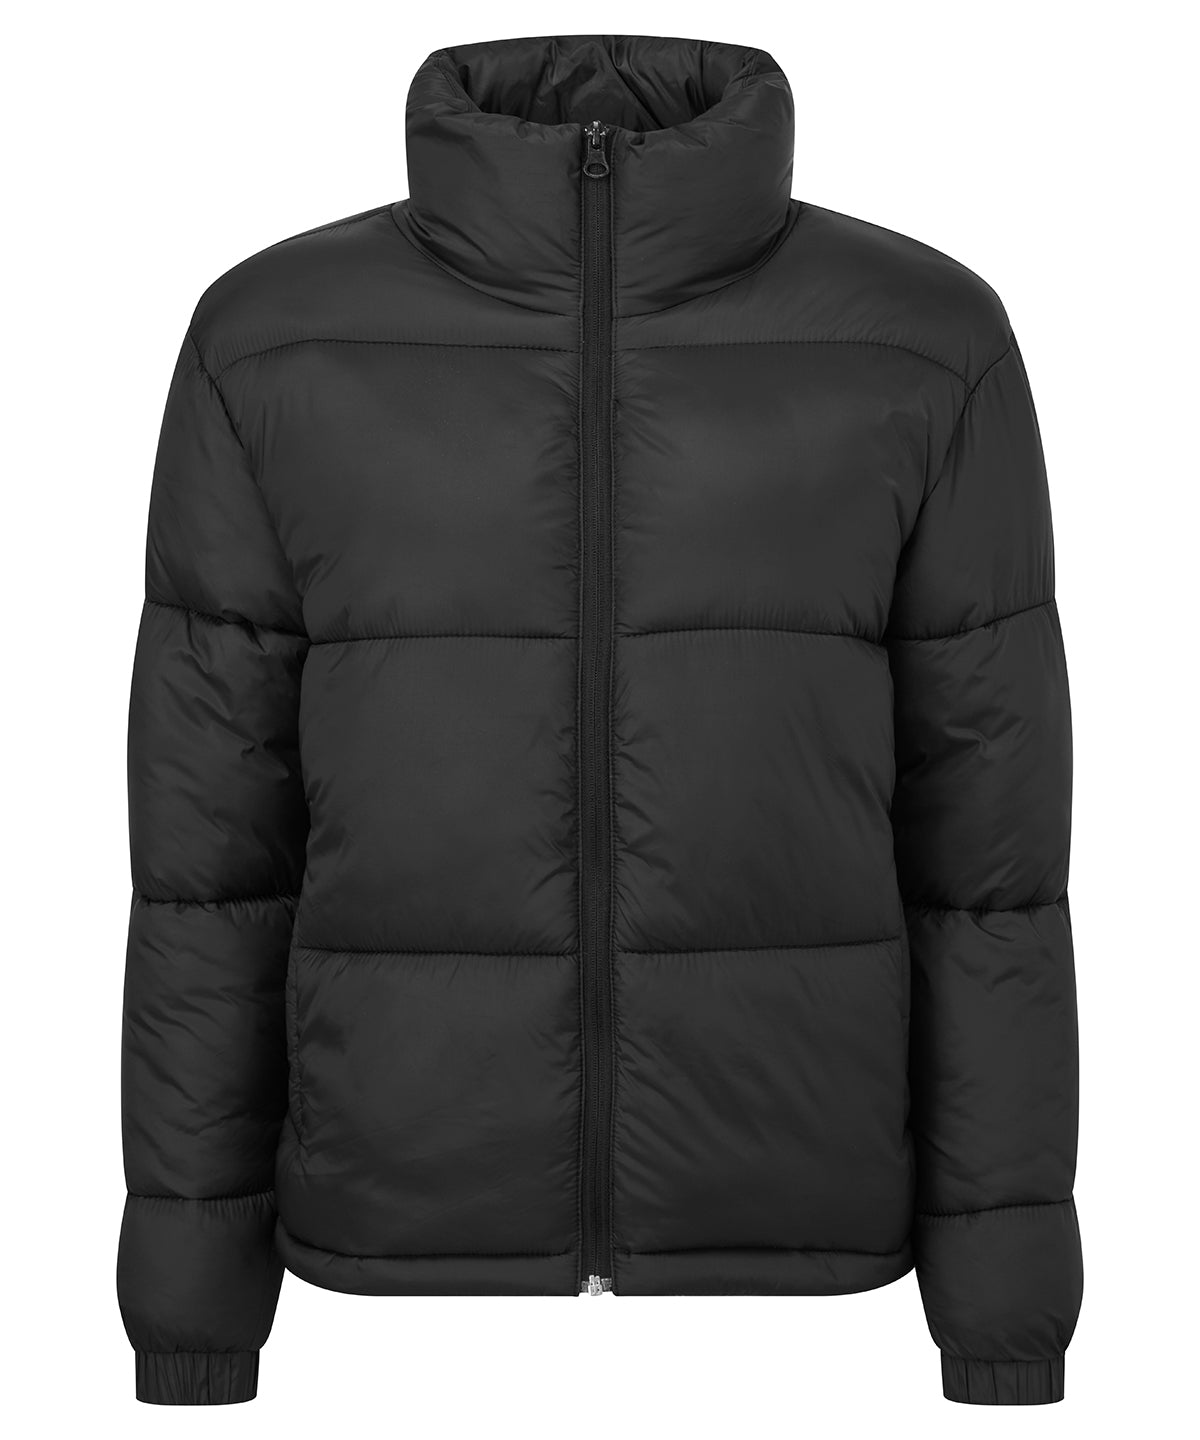 Personalised Jackets - Black TriDri® Women's TriDri® padded jacket